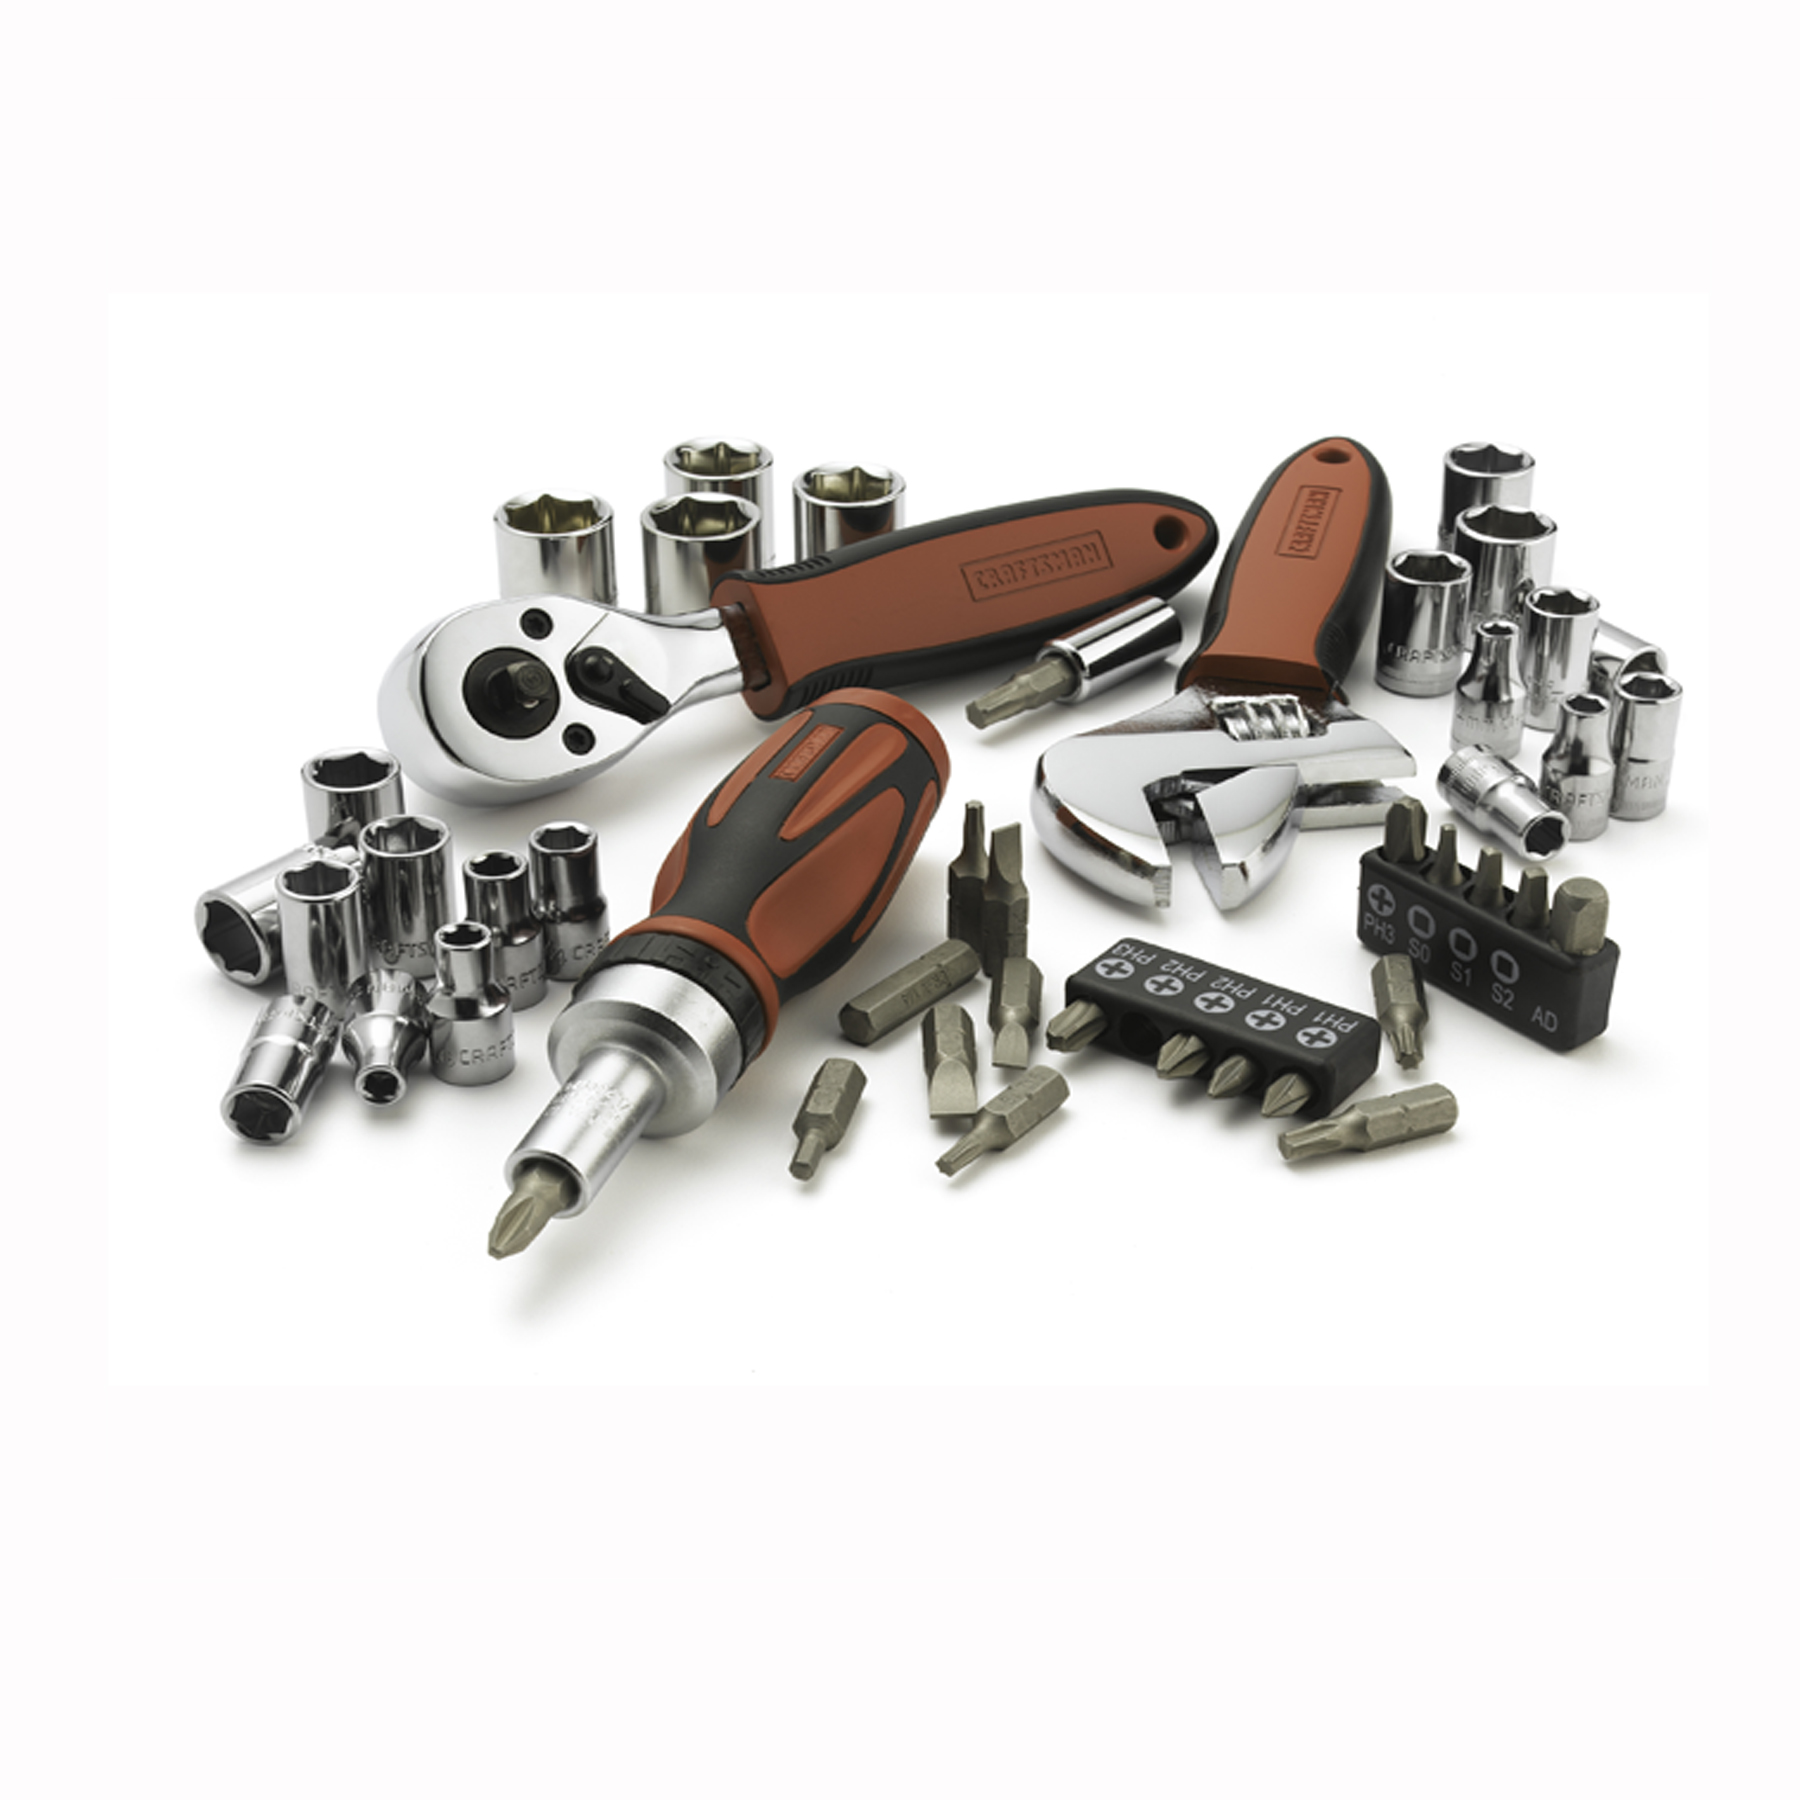 Craftsman 46-piece Stubby Tool Set—$14.97! (Reg $39.99)